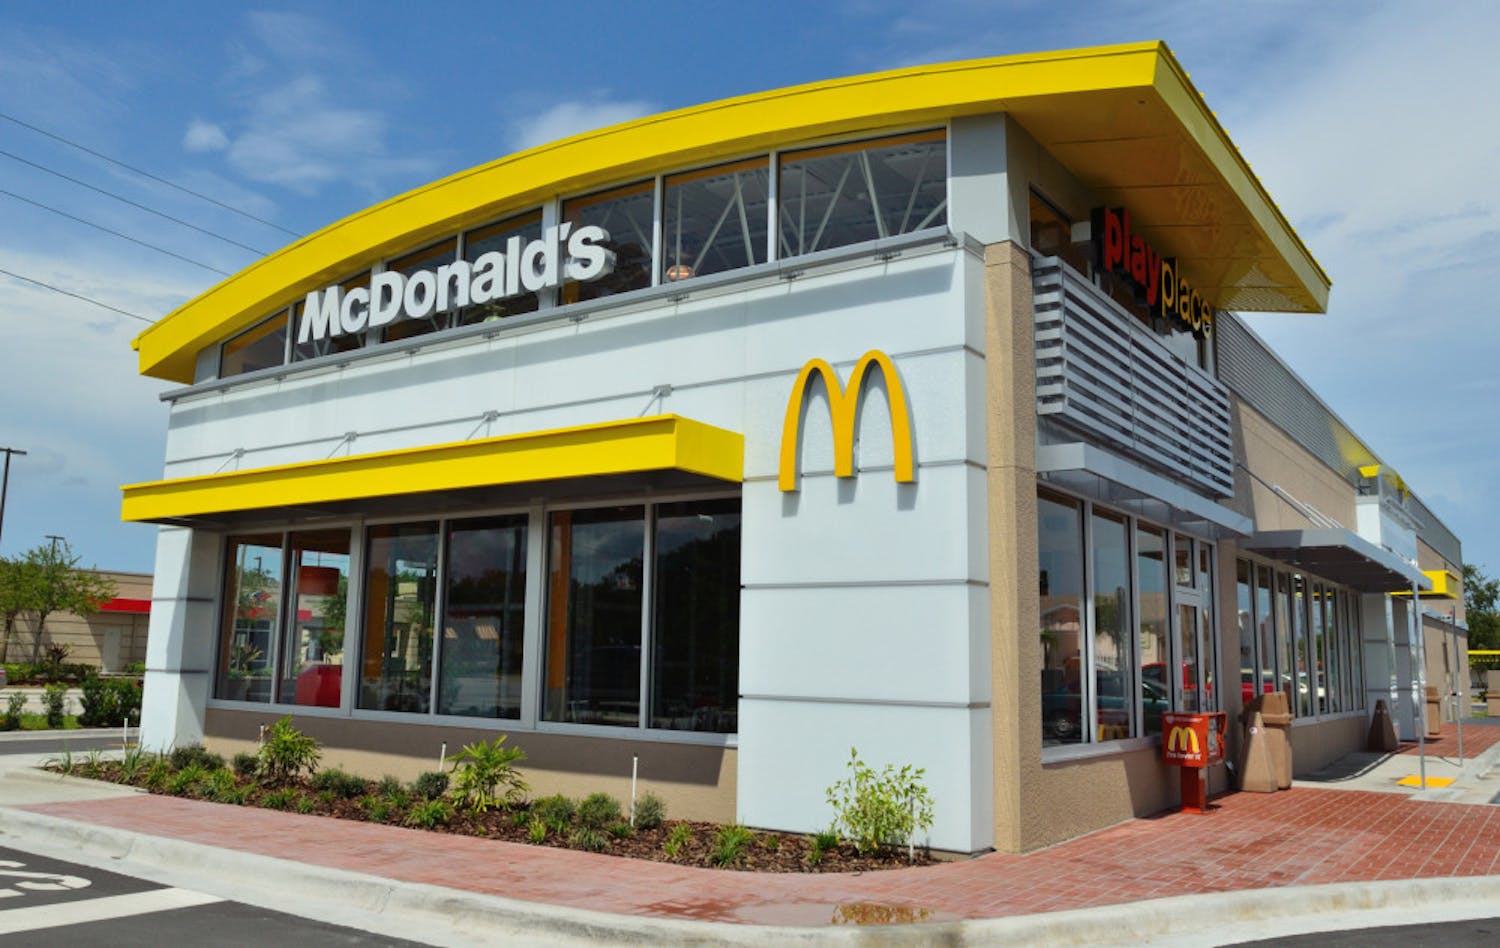 Pictured: A McDonald's restaurant in St. Petersburg, FL. 